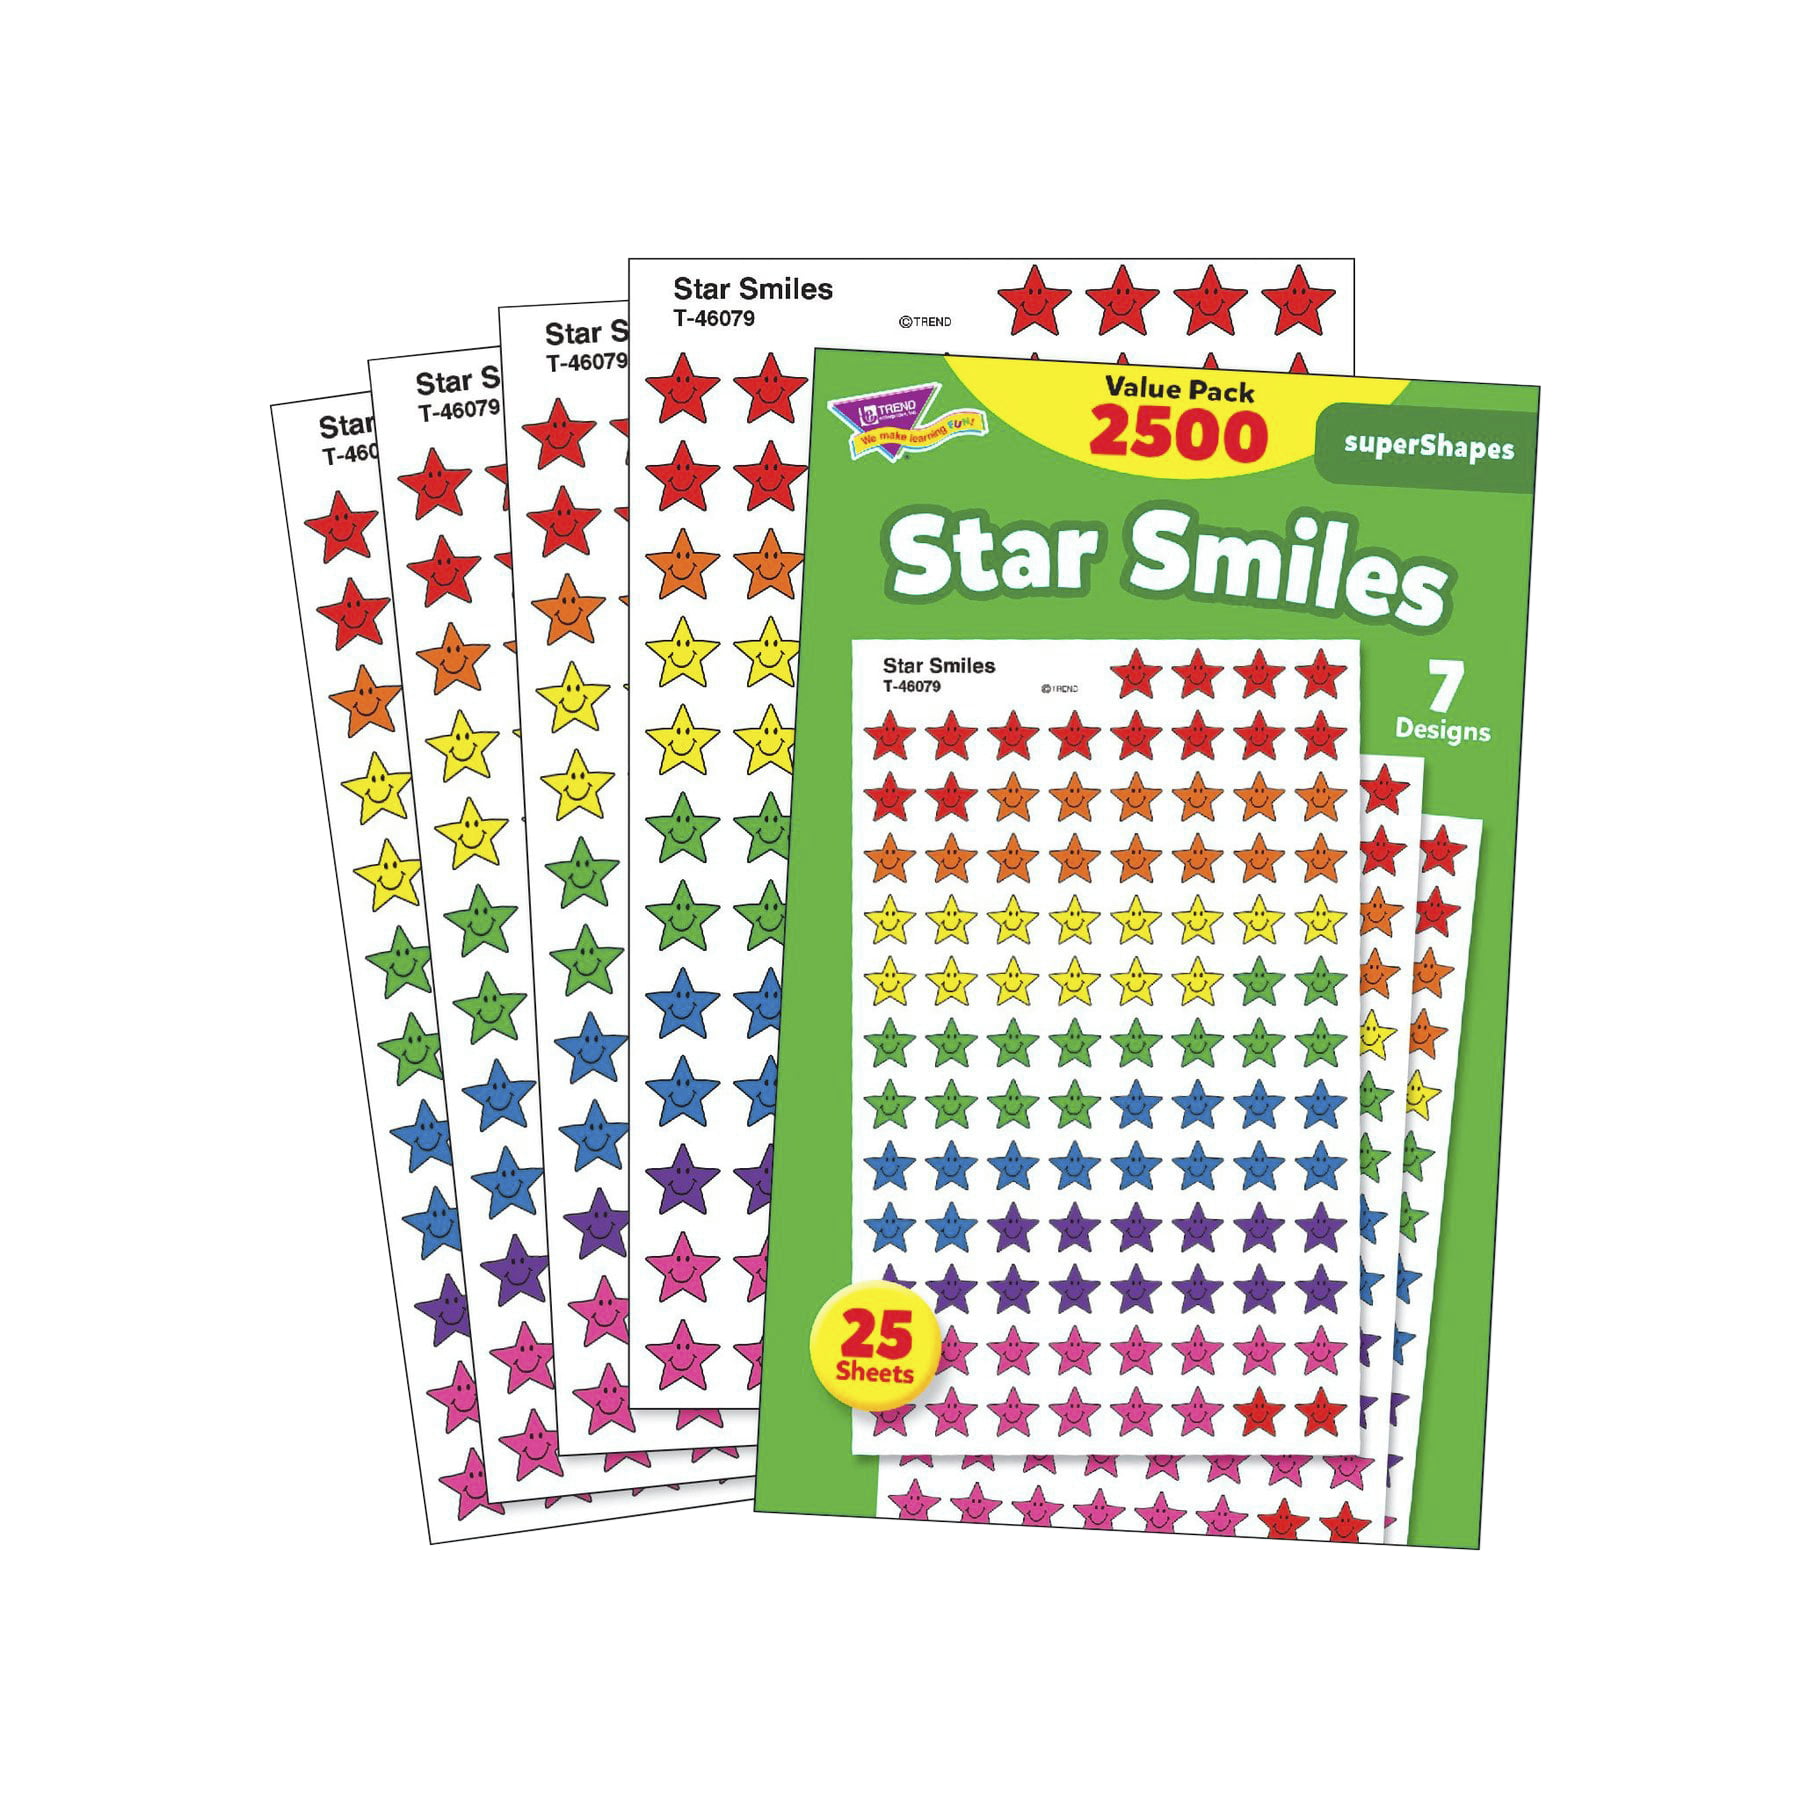 Trend Enterprises SuperShapes Star Smiles Sticker Pack, Pack of 2500 